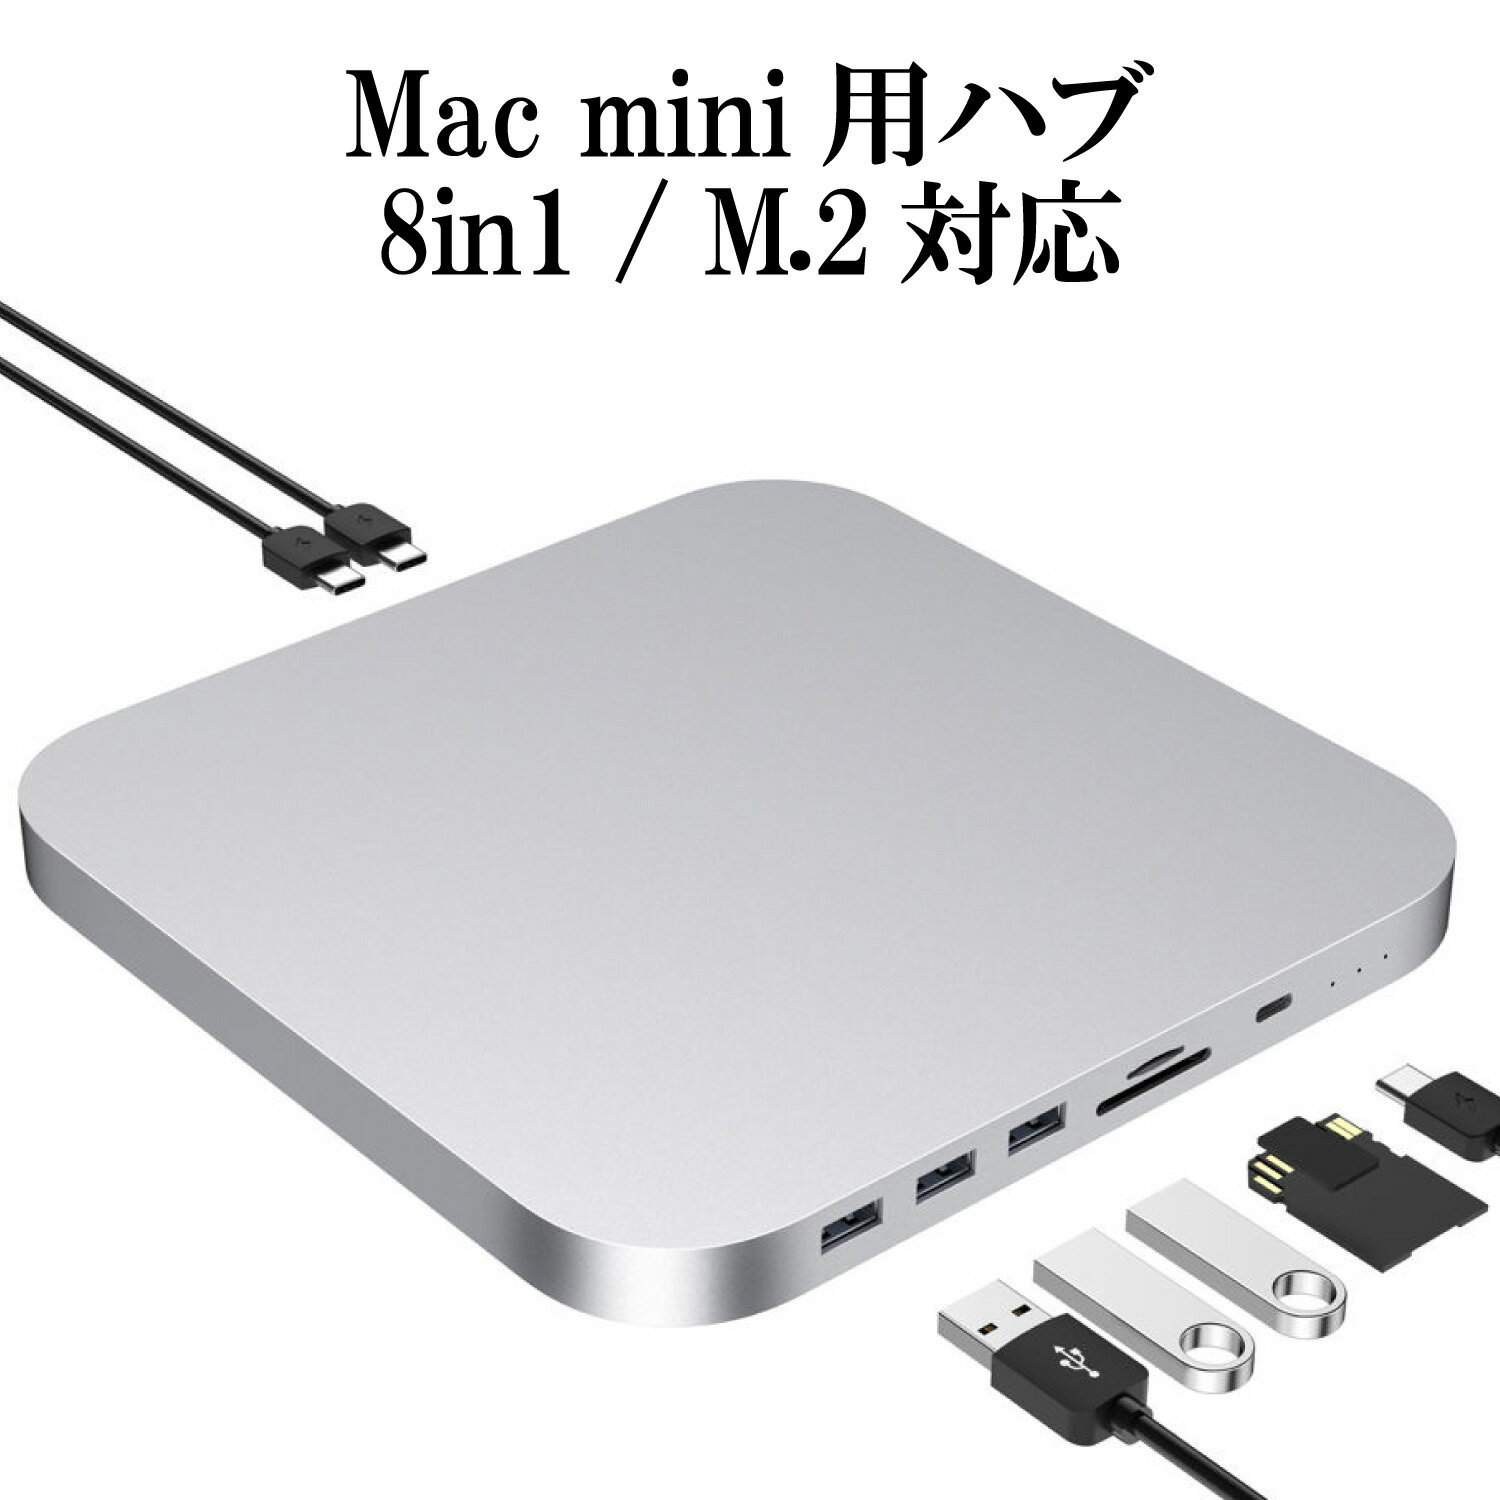 Mac mini ドッキングステーション ( 8in1 TypeC ハブ ) シルバー / M.2 + 2.5インチ SATA接続 SSD / HHD スロット (…